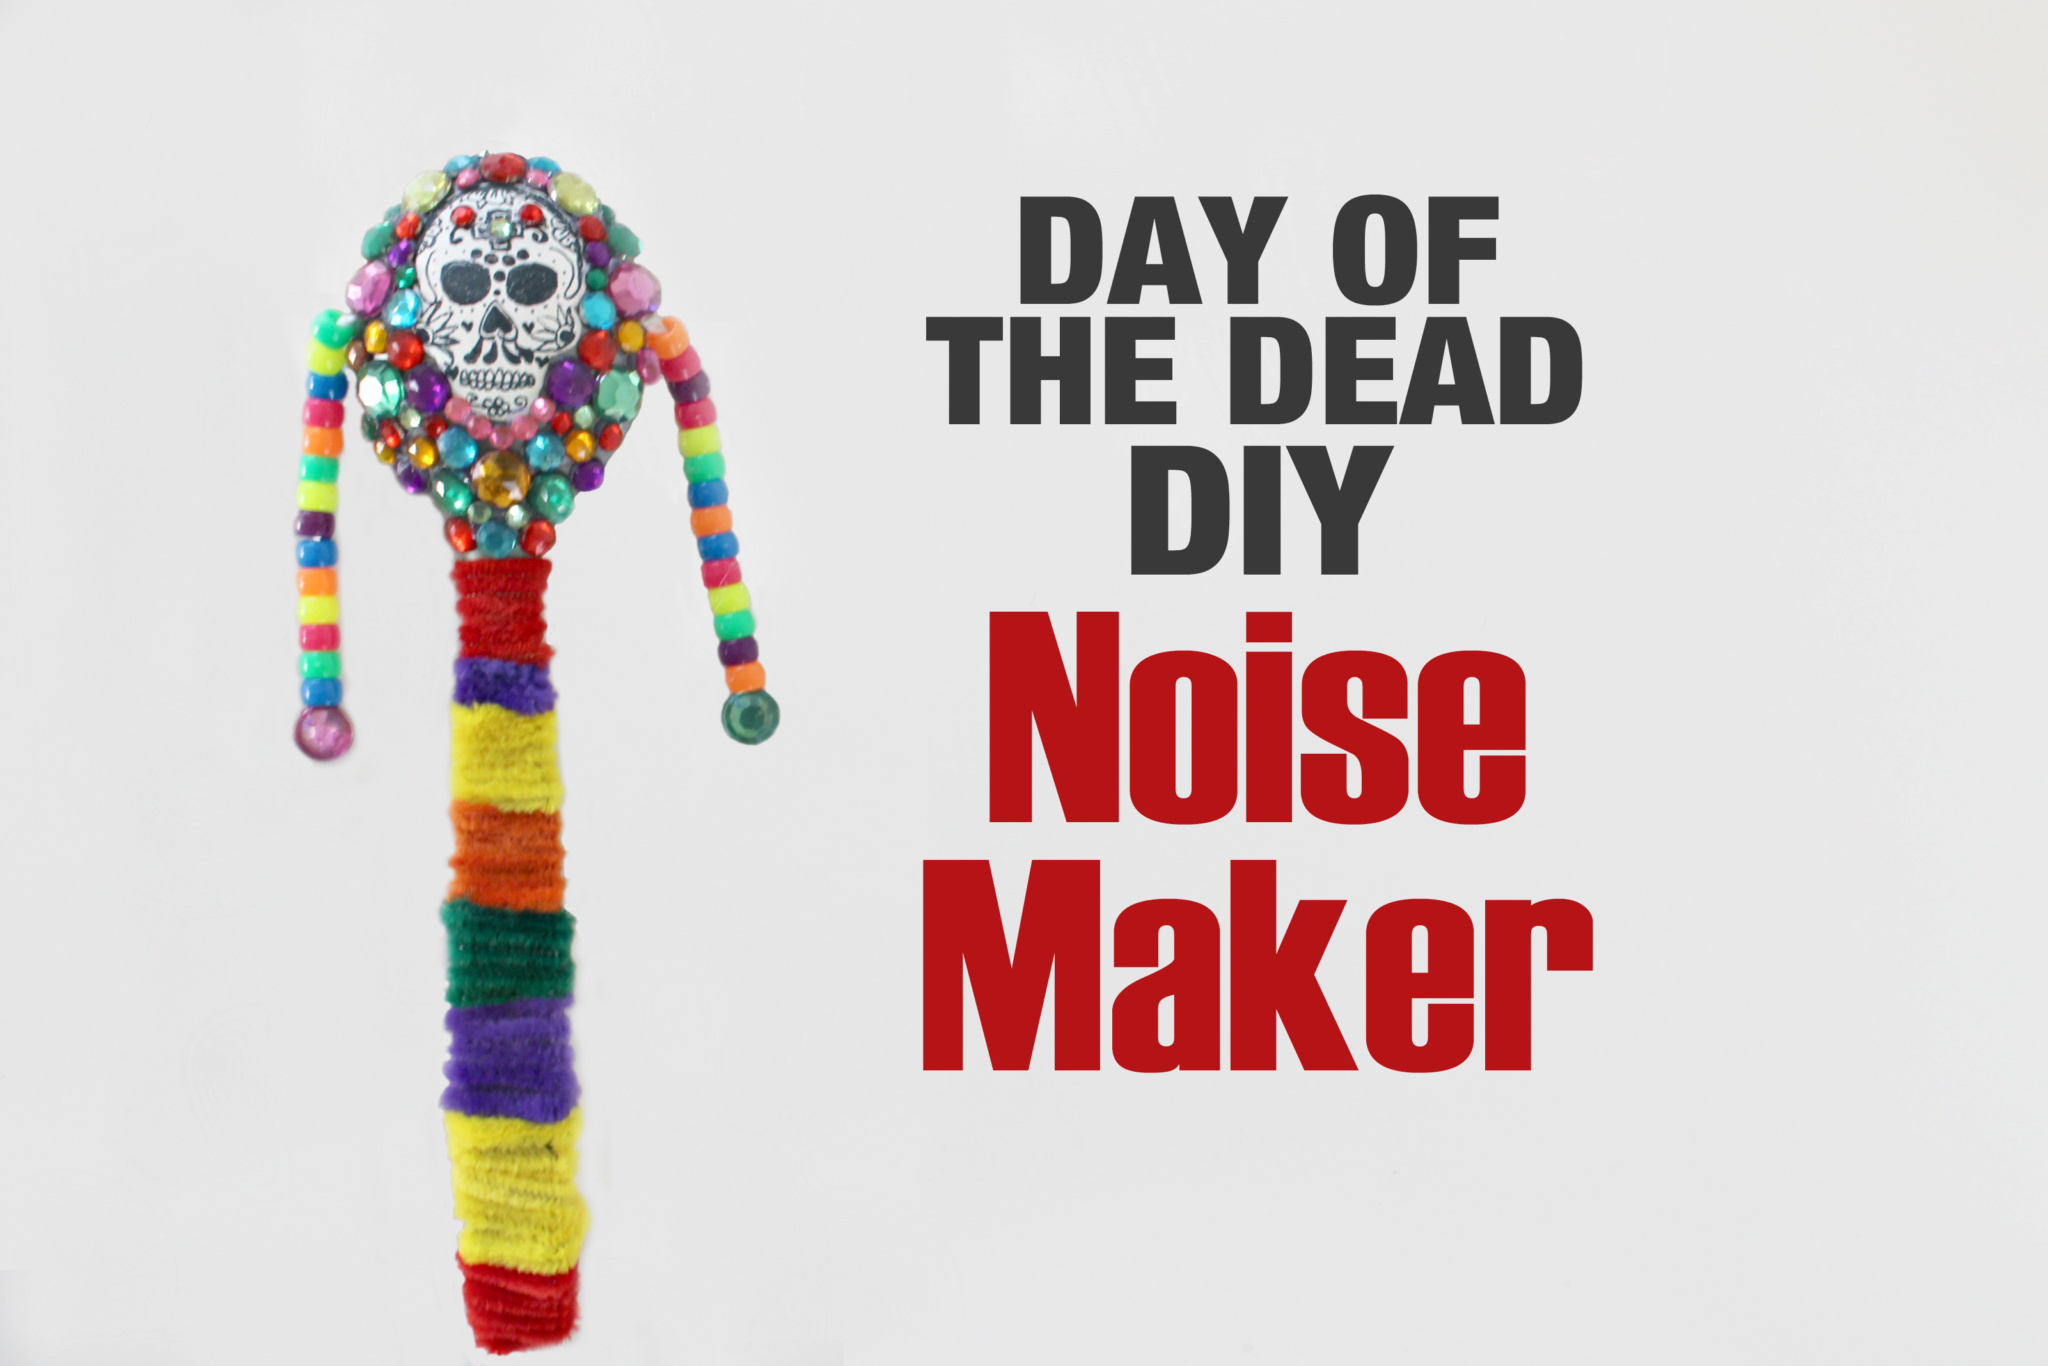 Day of the Dead DIY noise maker